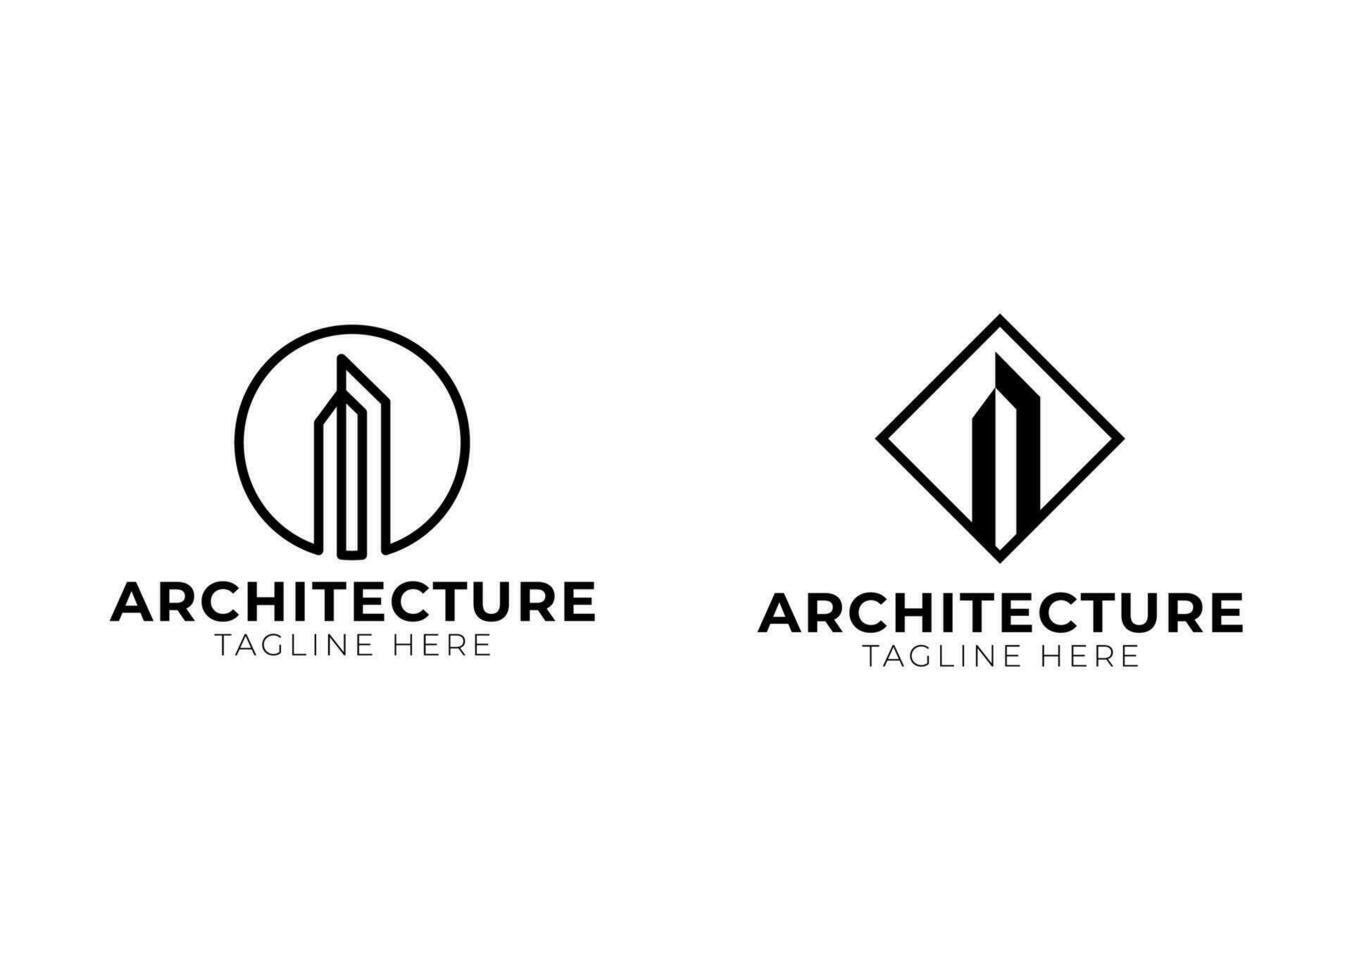 Minimalist Architecture, Building, Construction logo design template vector